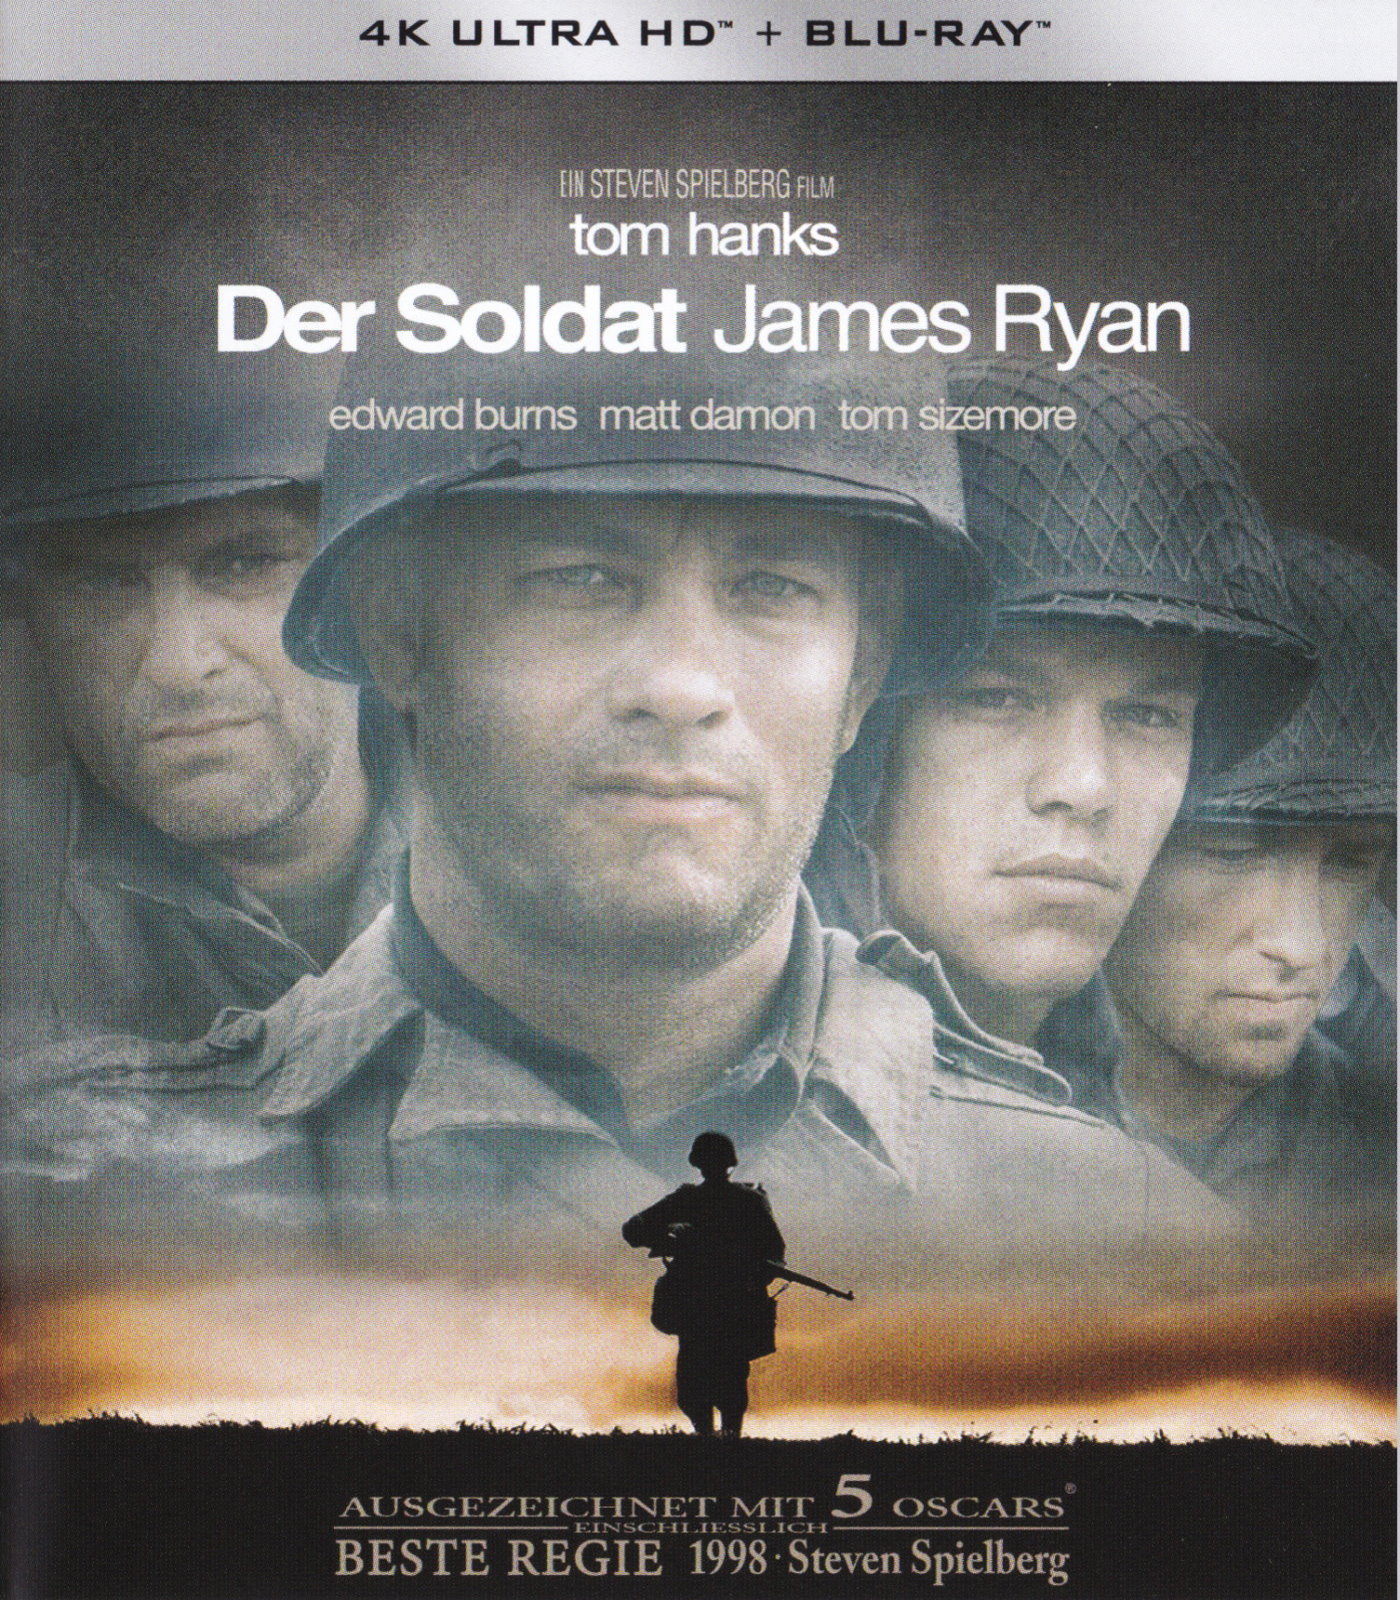 Cover - Der Soldat James Ryan.jpg